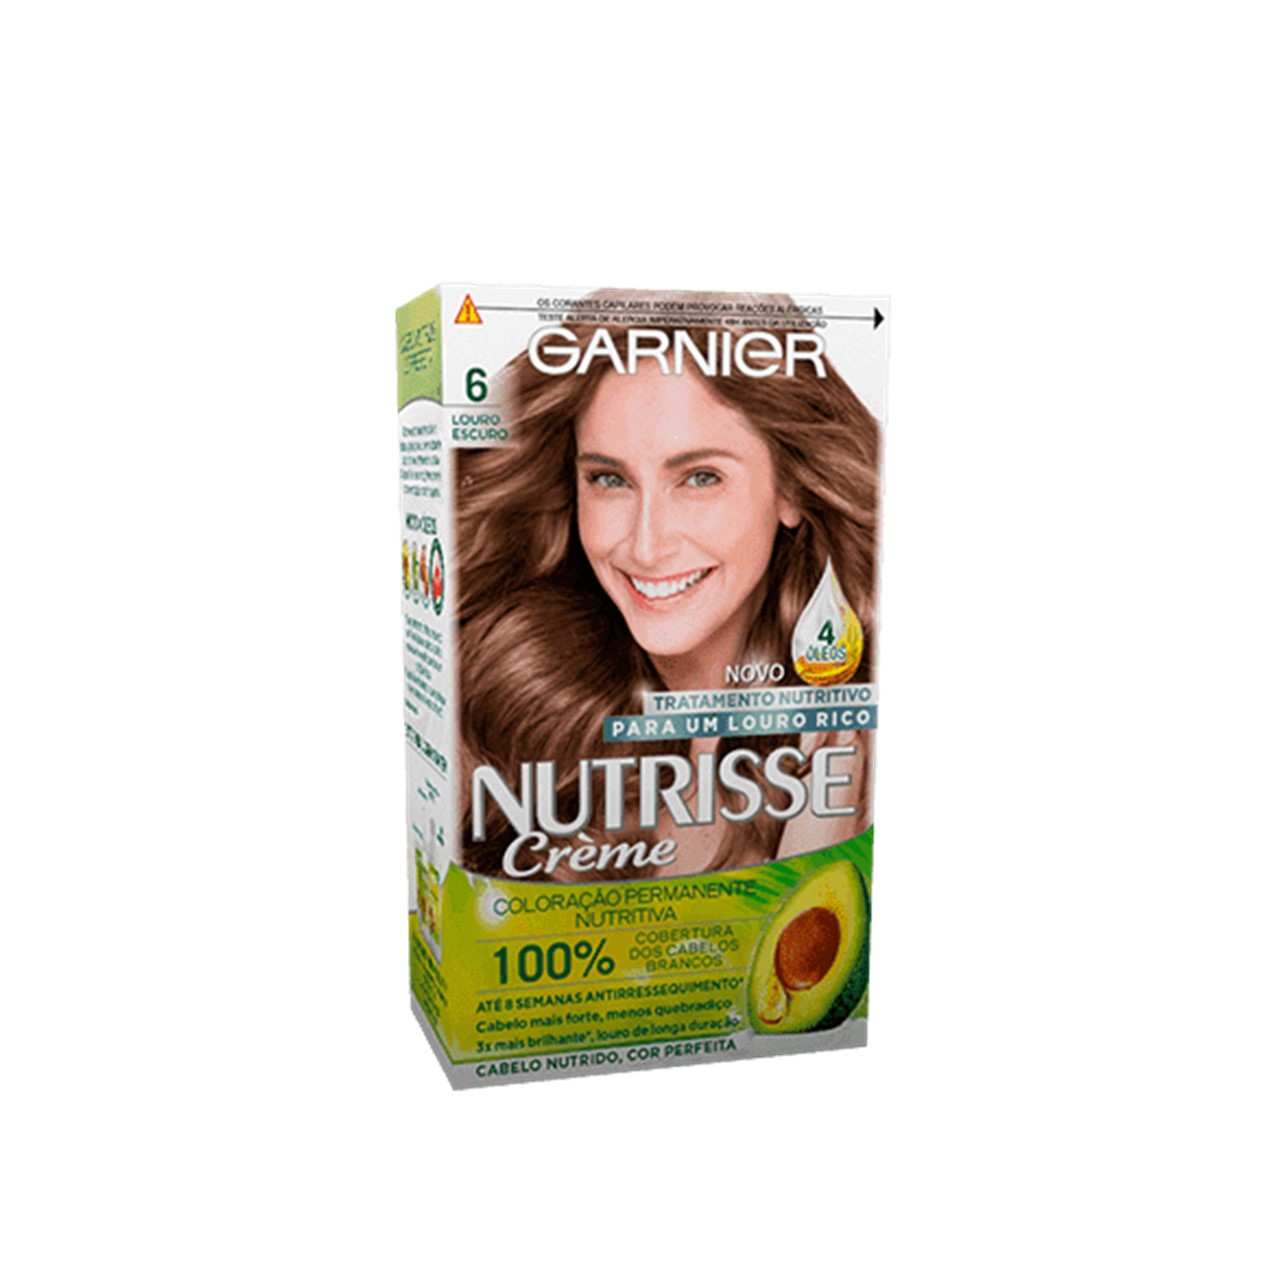 Garnier Nutrisse Crème 6 Light Brown Permanent Hair Dye